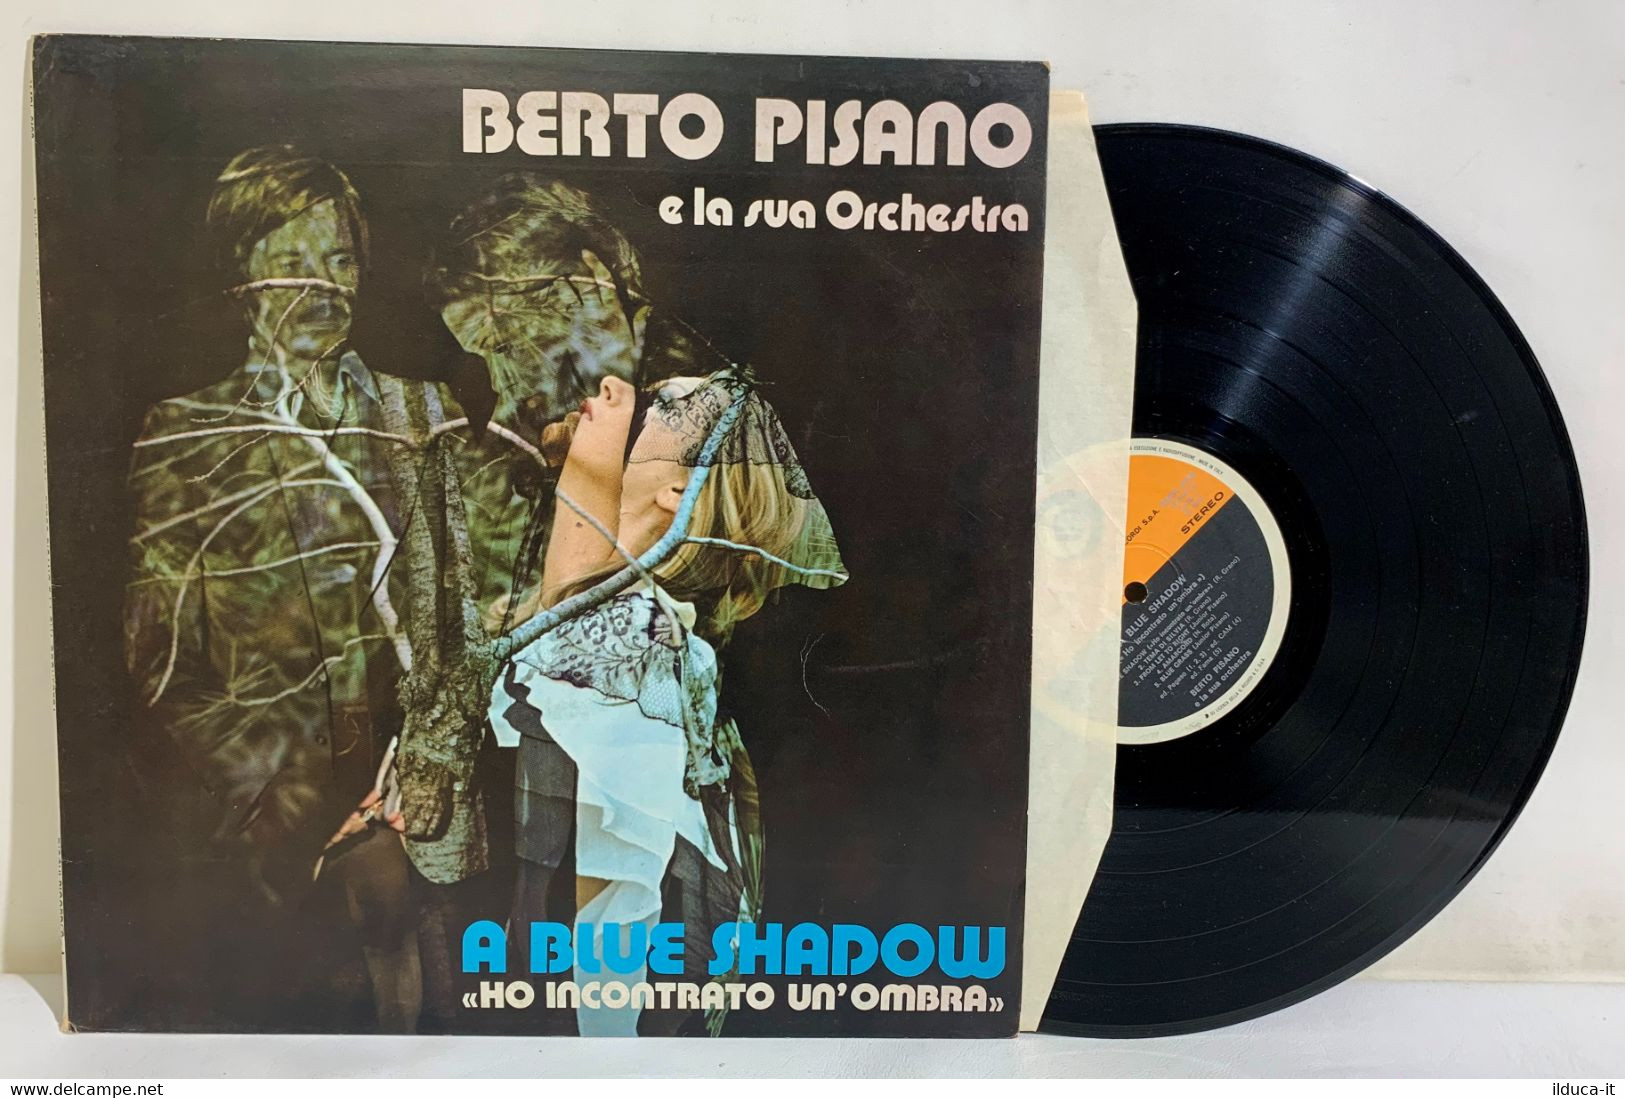 I111103 LP 33 Giri - Berto Pisano - A Blue Shadow Ho Incontrato Un'ombra - 1974 - Other - Italian Music